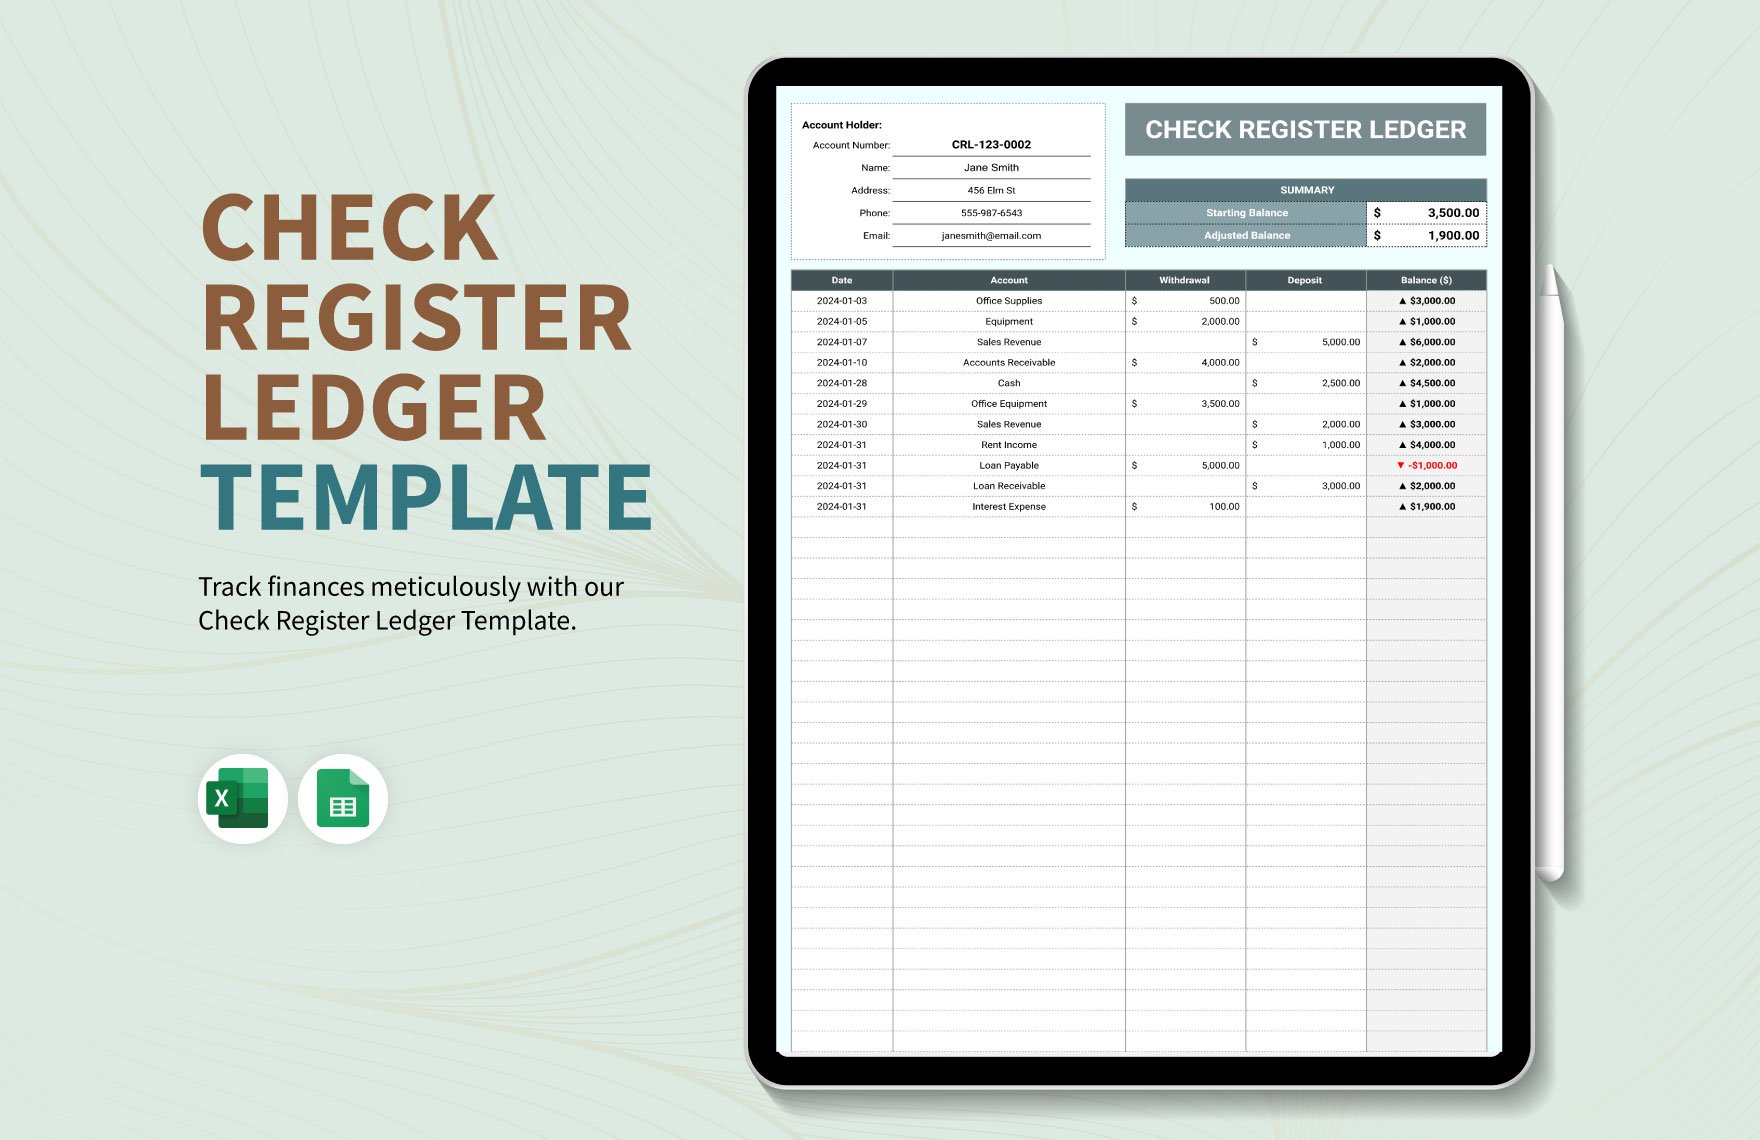 Check Register Ledger Template in Excel, Google Sheets